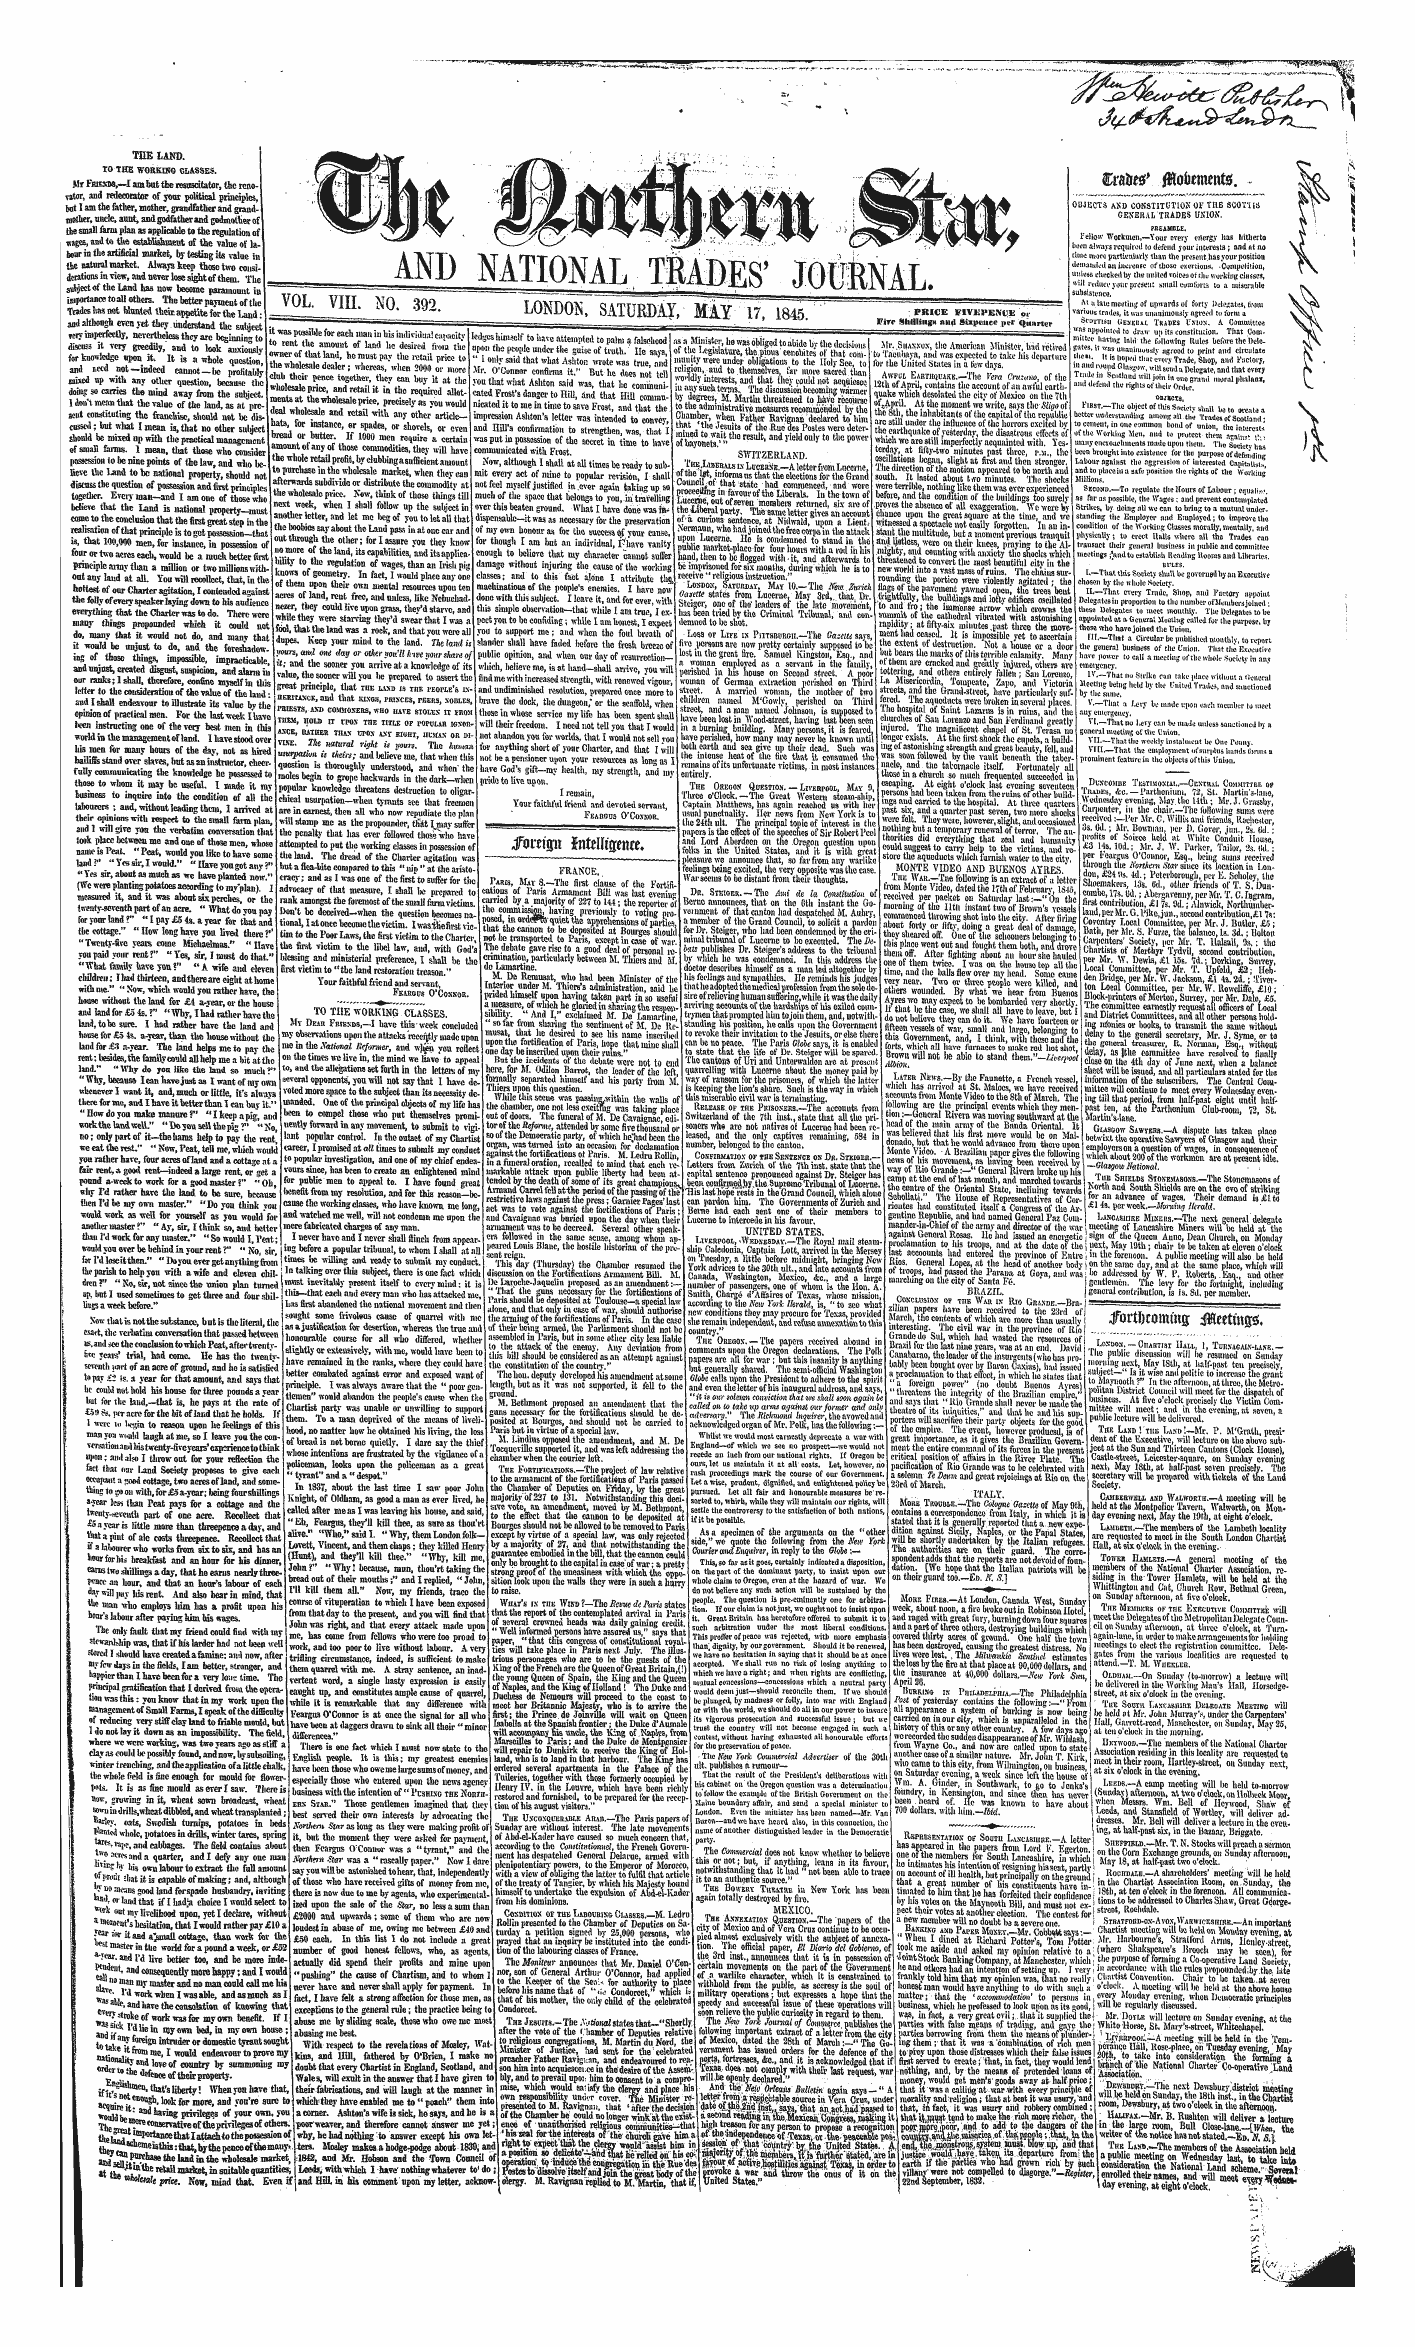 Northern Star (1837-1852): jS F Y, 1st edition - Craw. Jutobemtnte. • ,§£ B